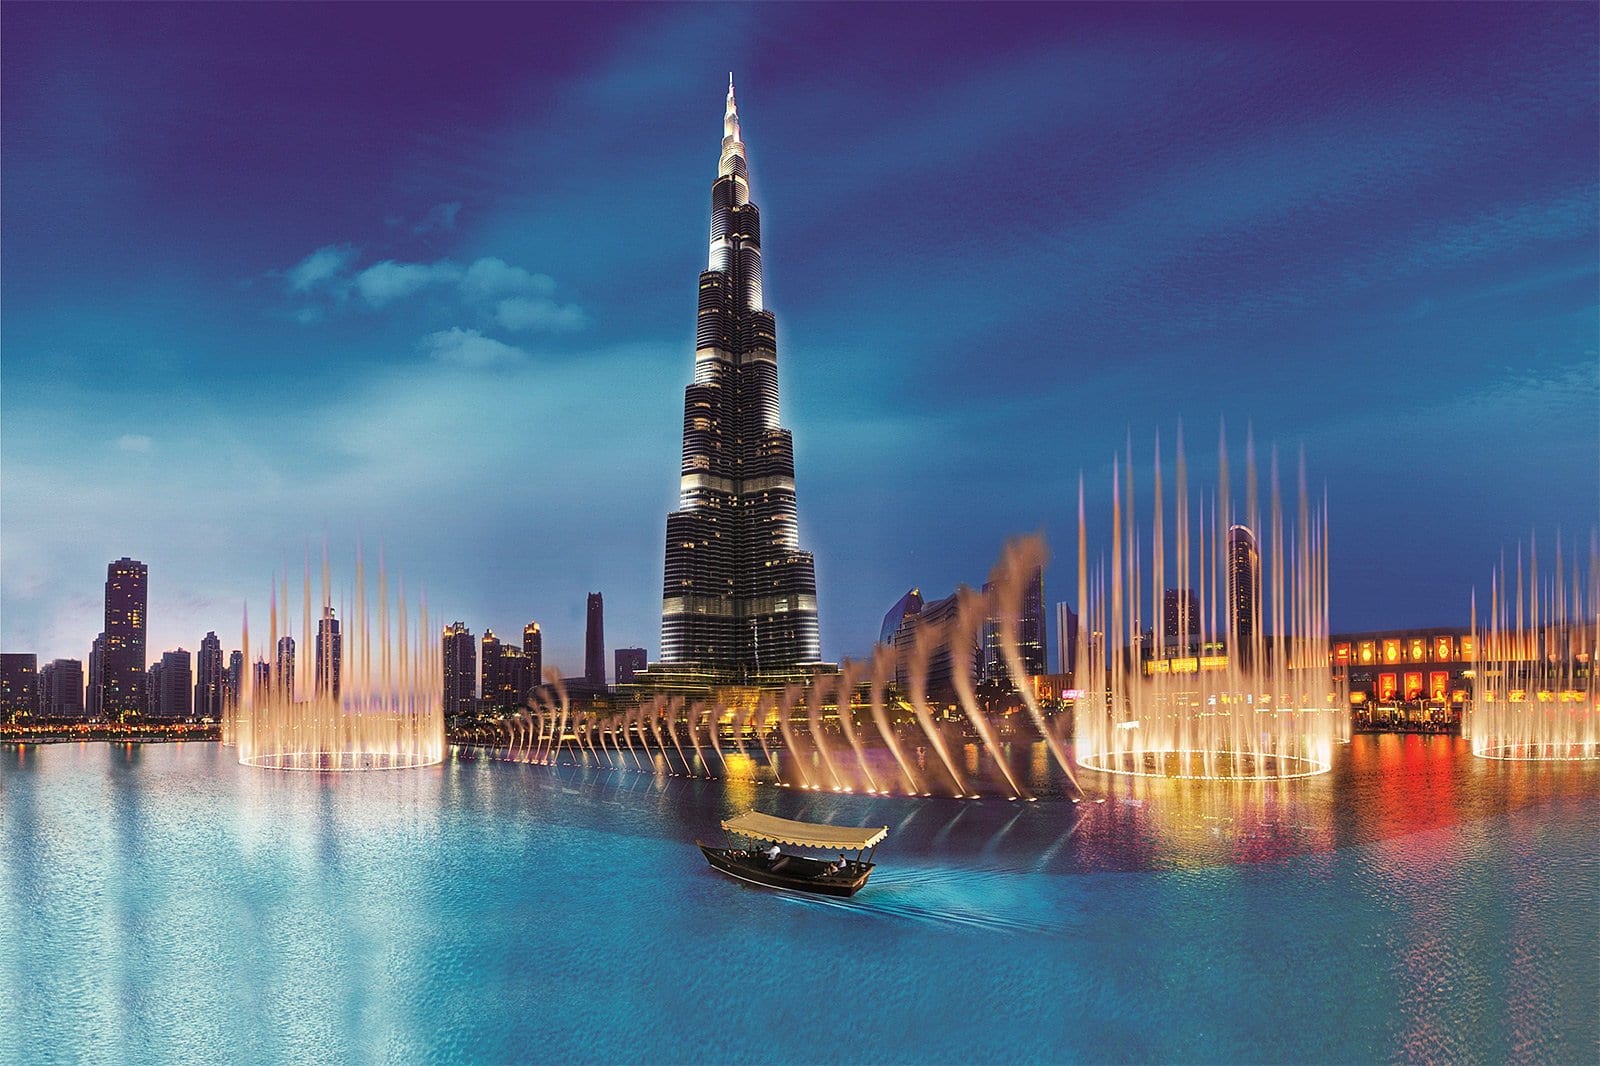 Dubai fountain show at dubai mall